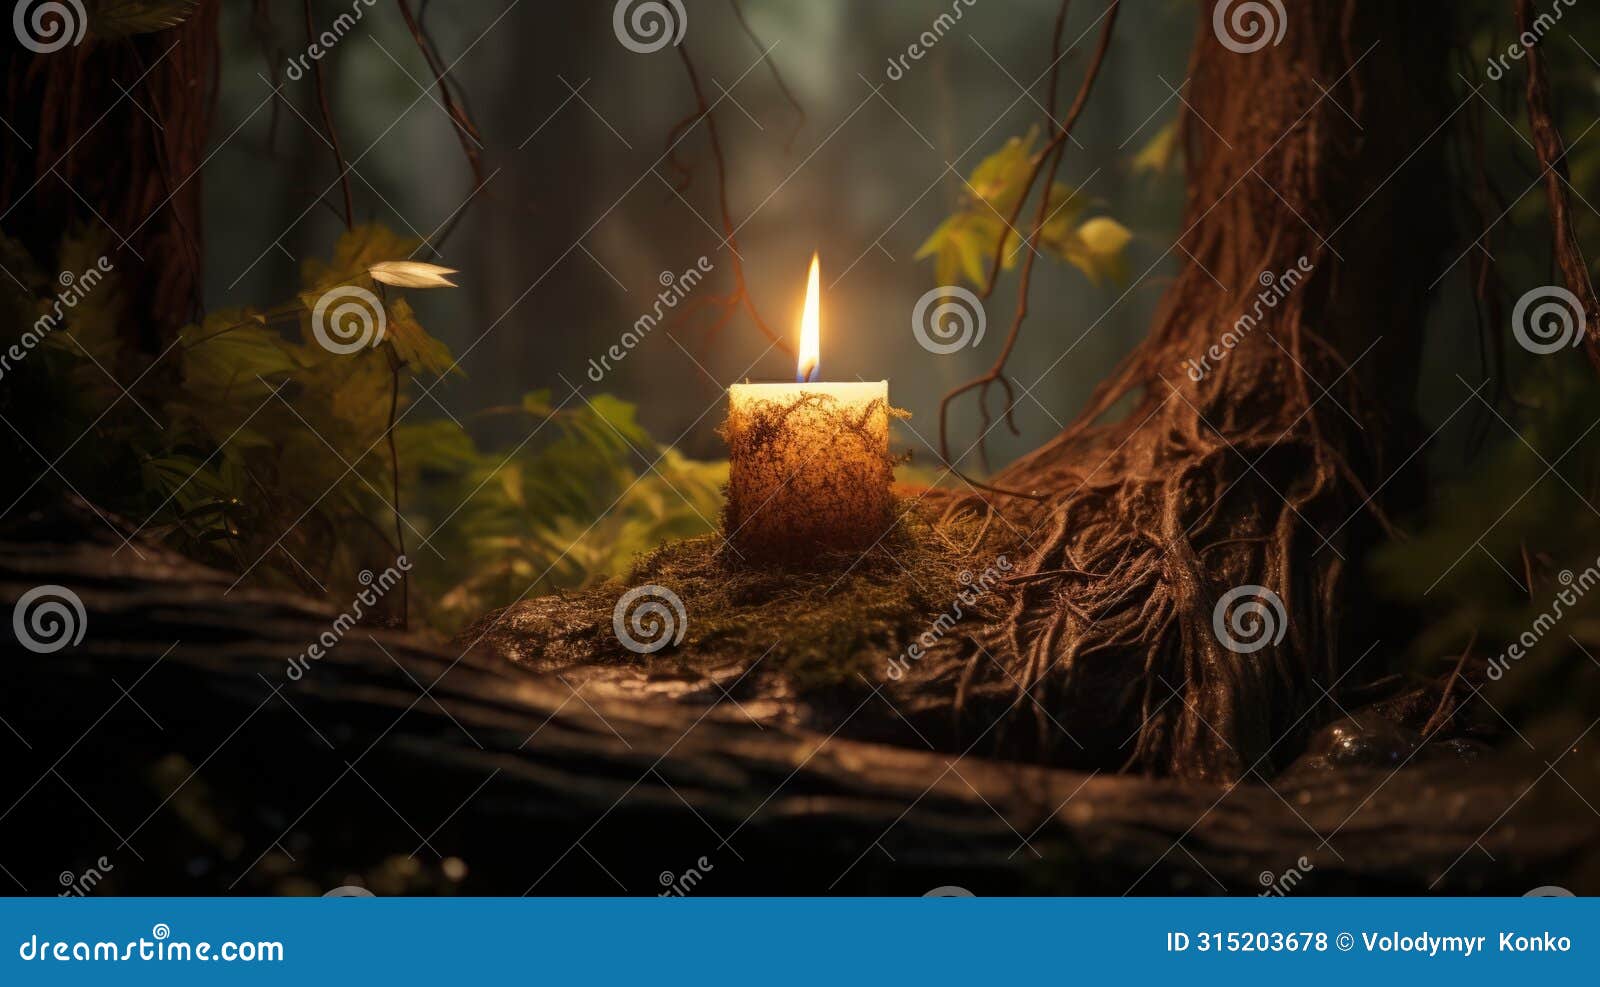 a serene candle illuminates the enchanting forest